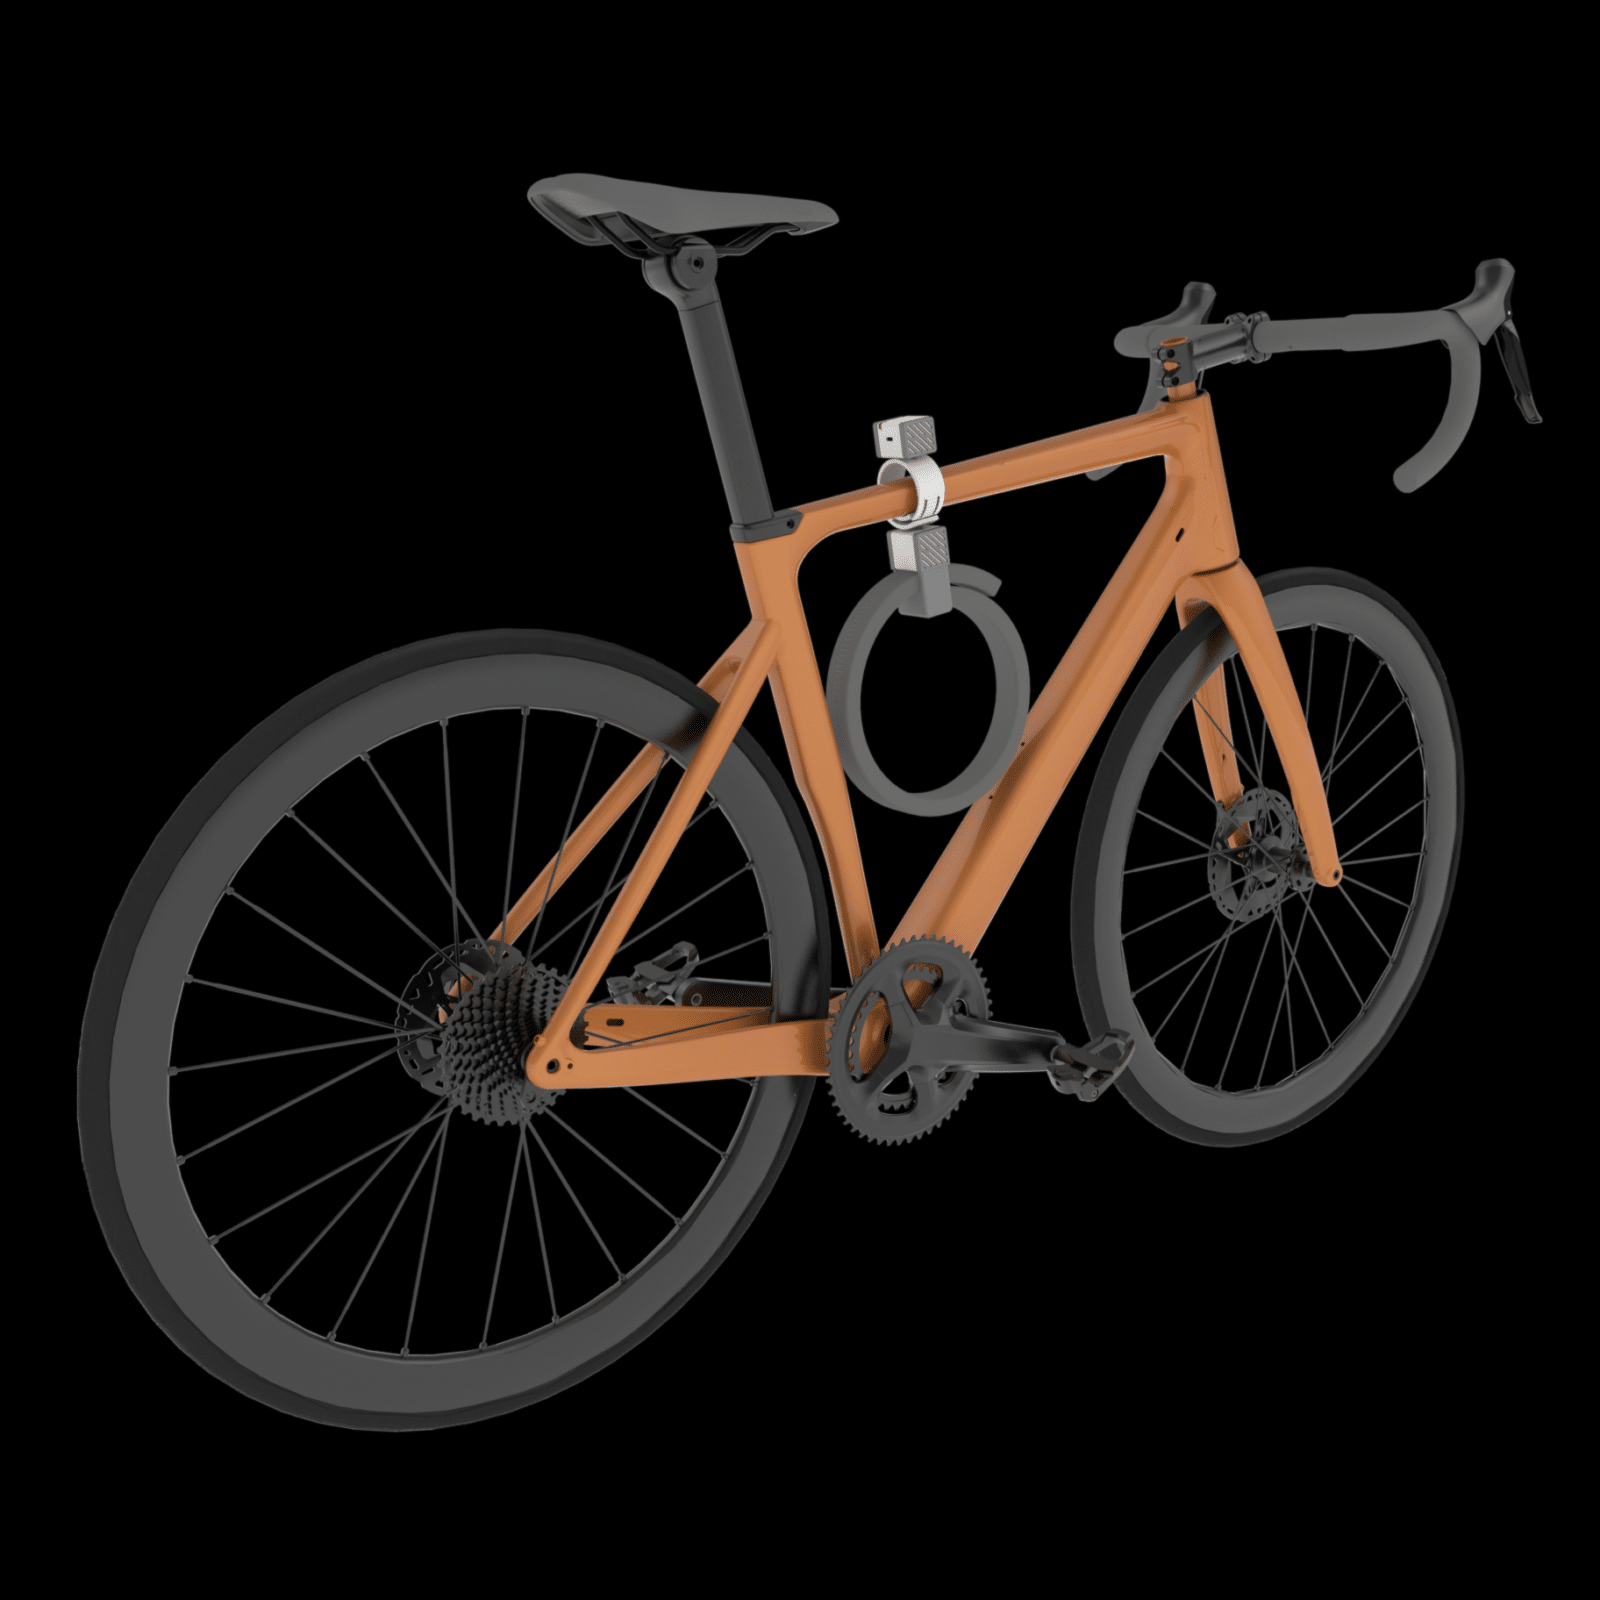 Horizon Alpha lock mounted to a bicycle.